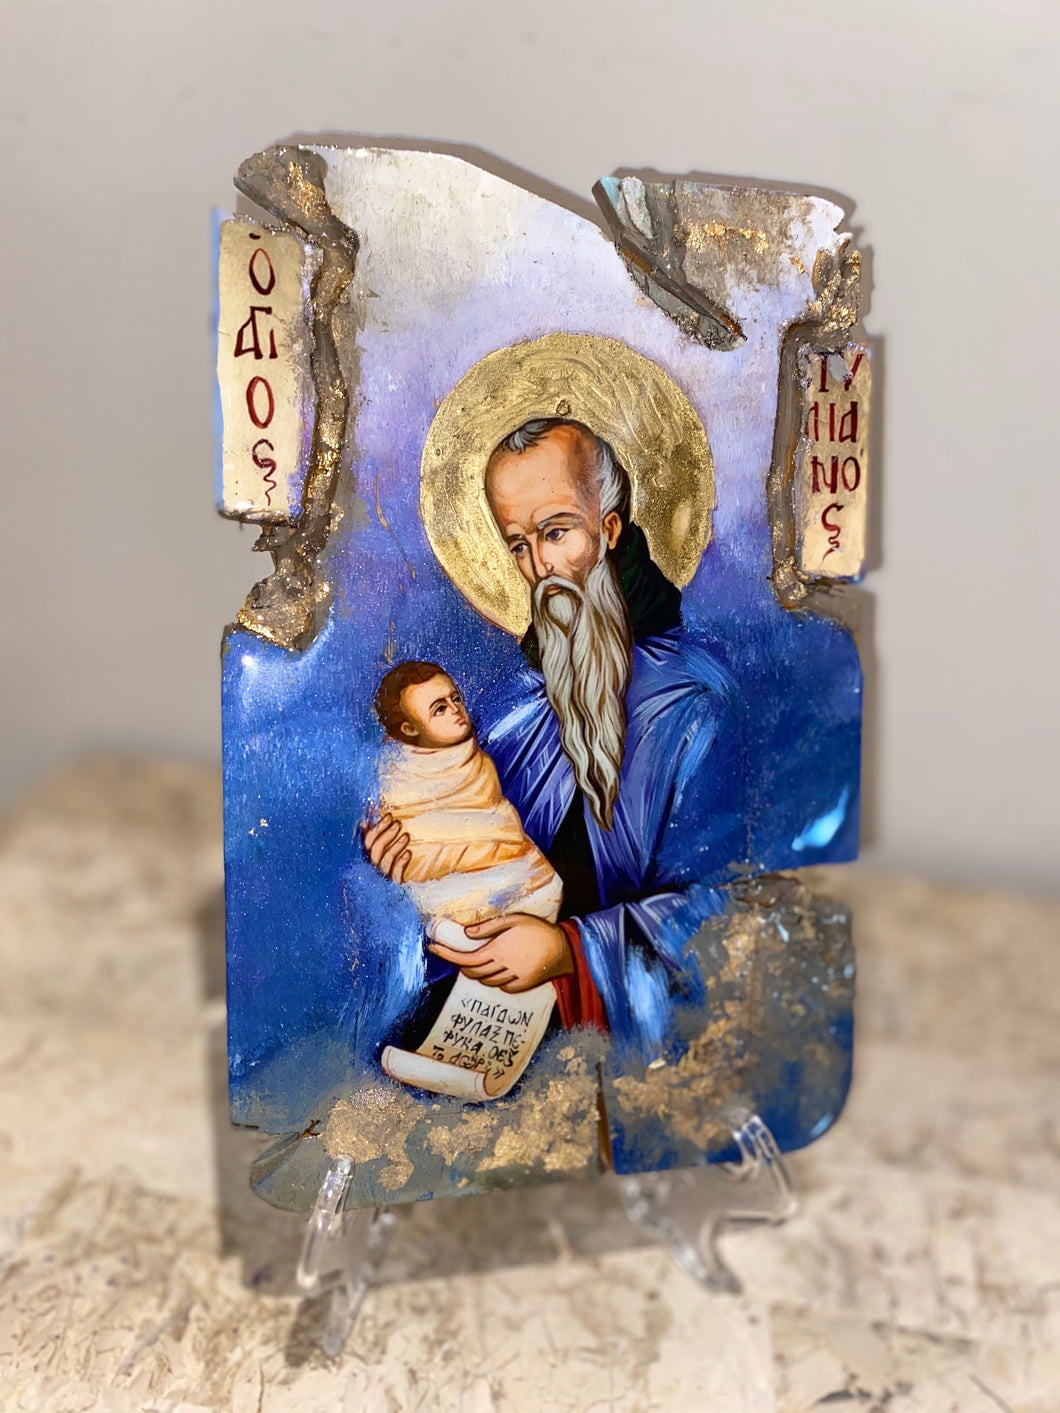 Saint stylianos  - religious wood epoxy resin handmade icon art - Only 1 off - Original